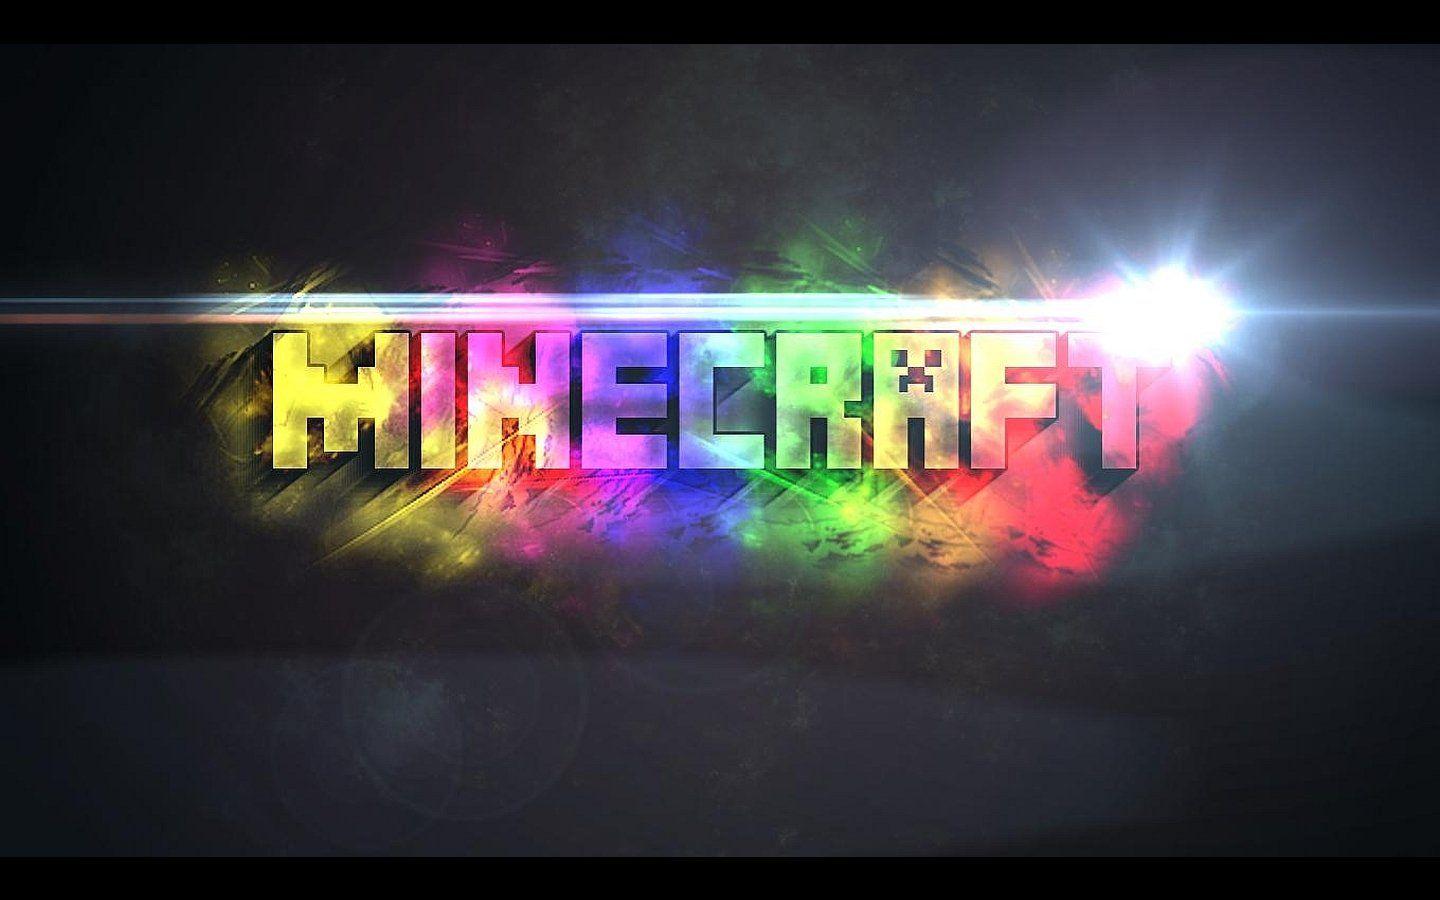 Minecraft Logo Wallpapers Wallpaper Cave